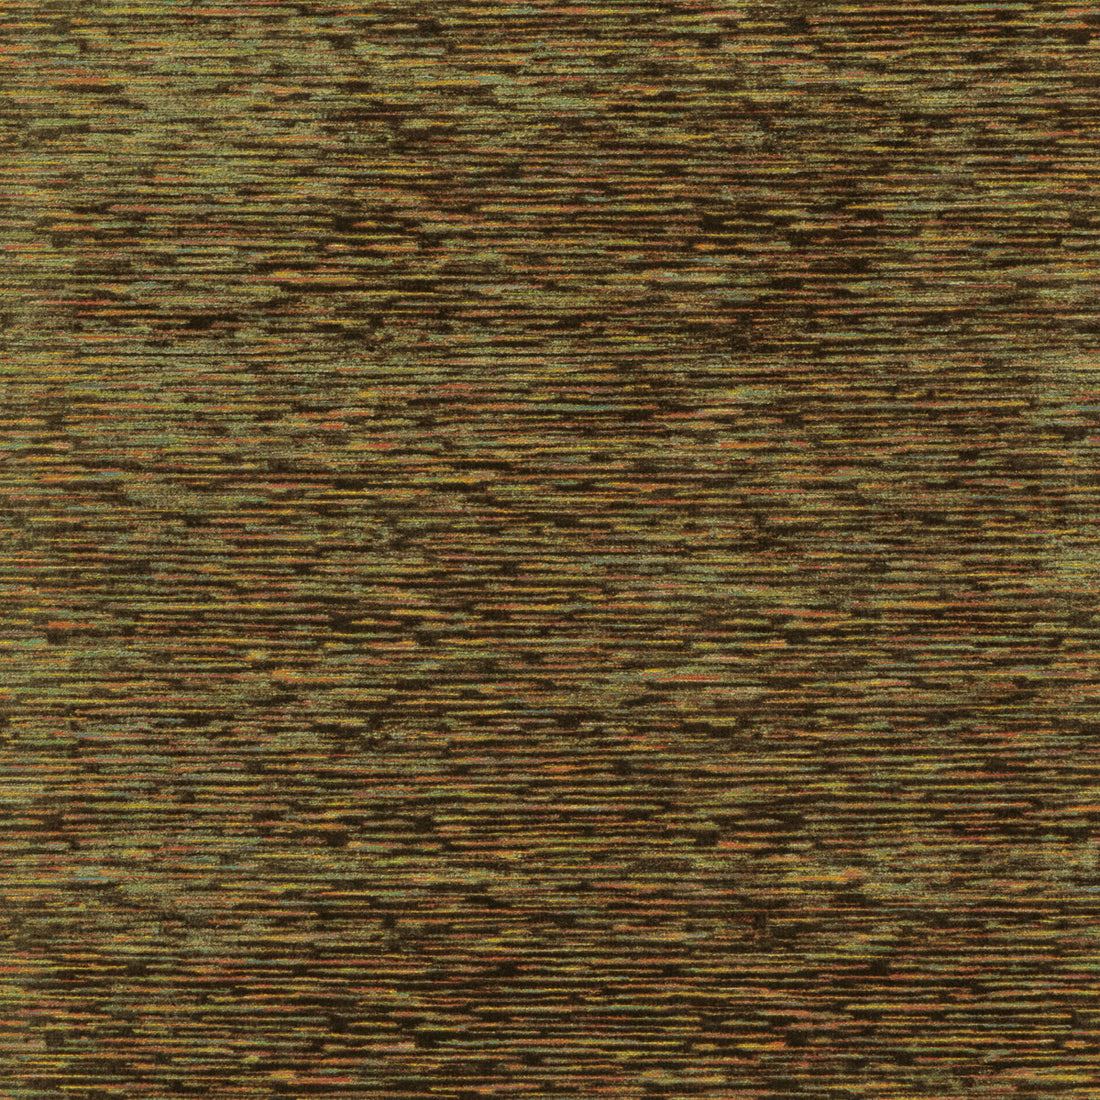 Keswick Velvet fabric in bronze color - pattern BF10760.850.0 - by G P &amp; J Baker in the Keswick Velvets collection